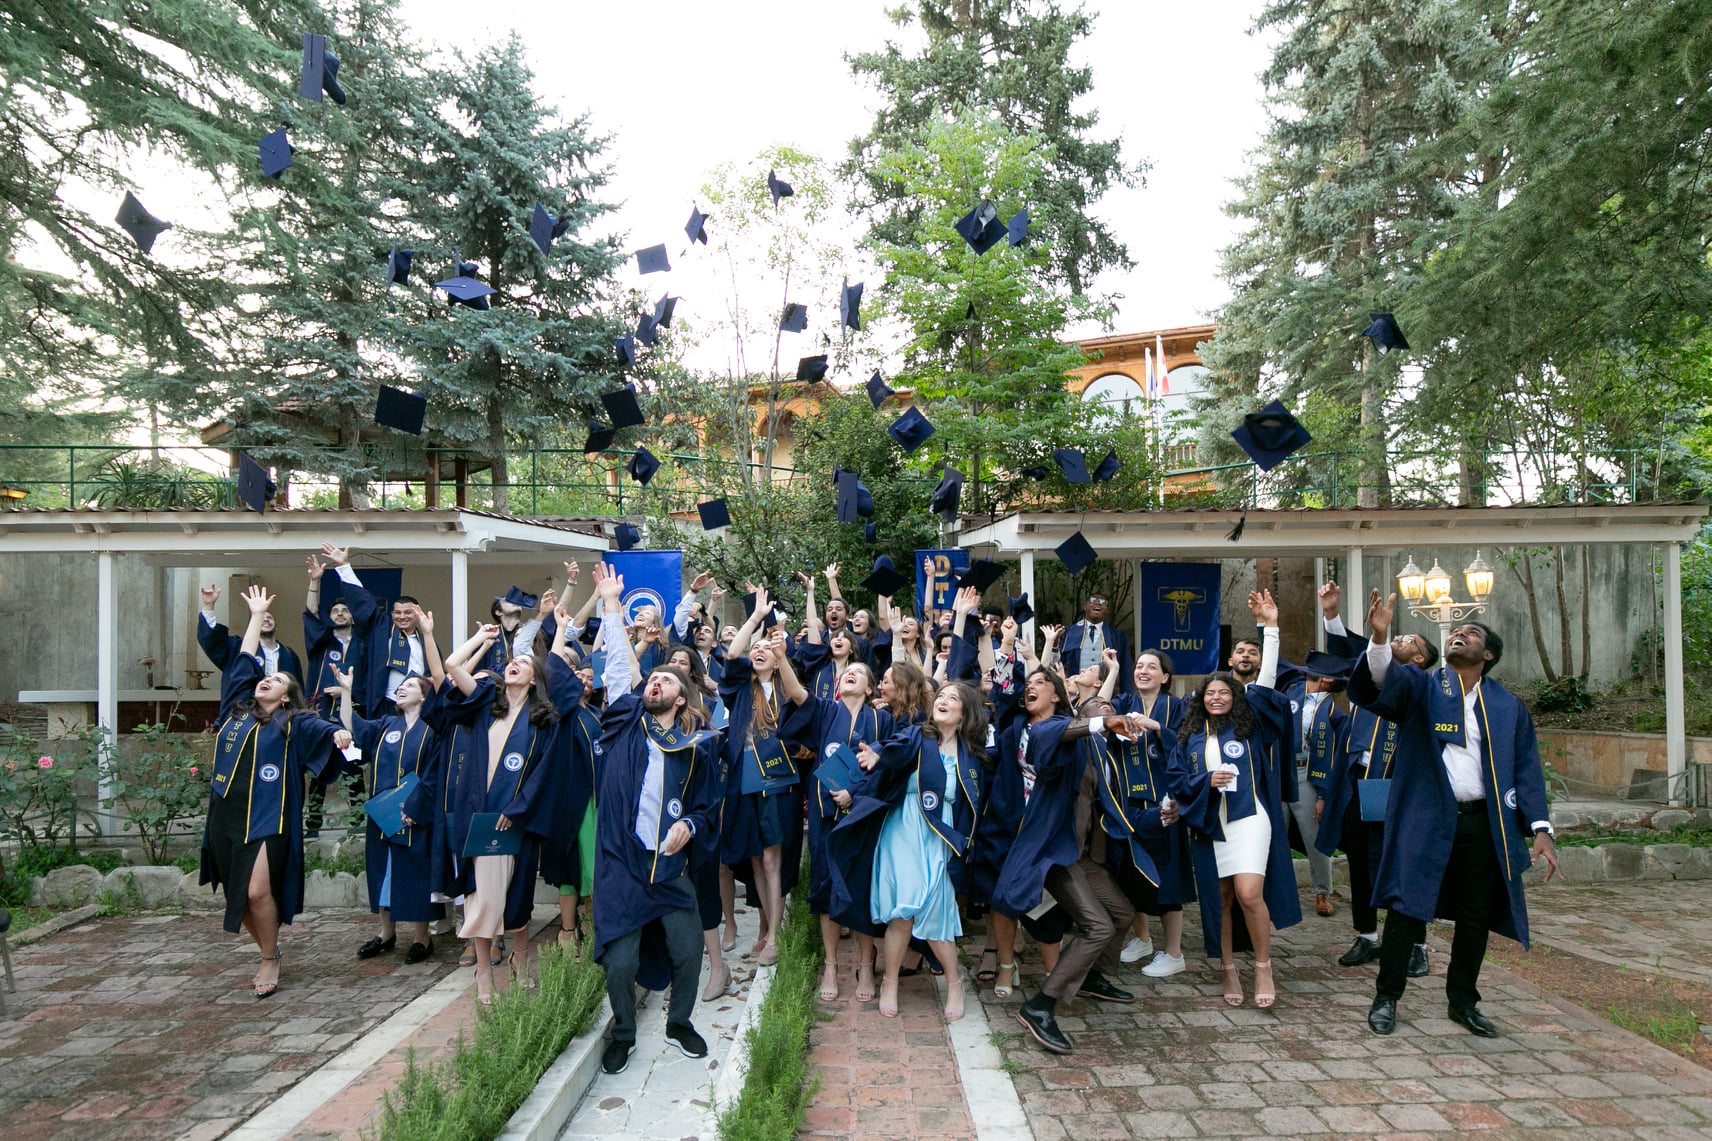 DTMU Graduation 2021 